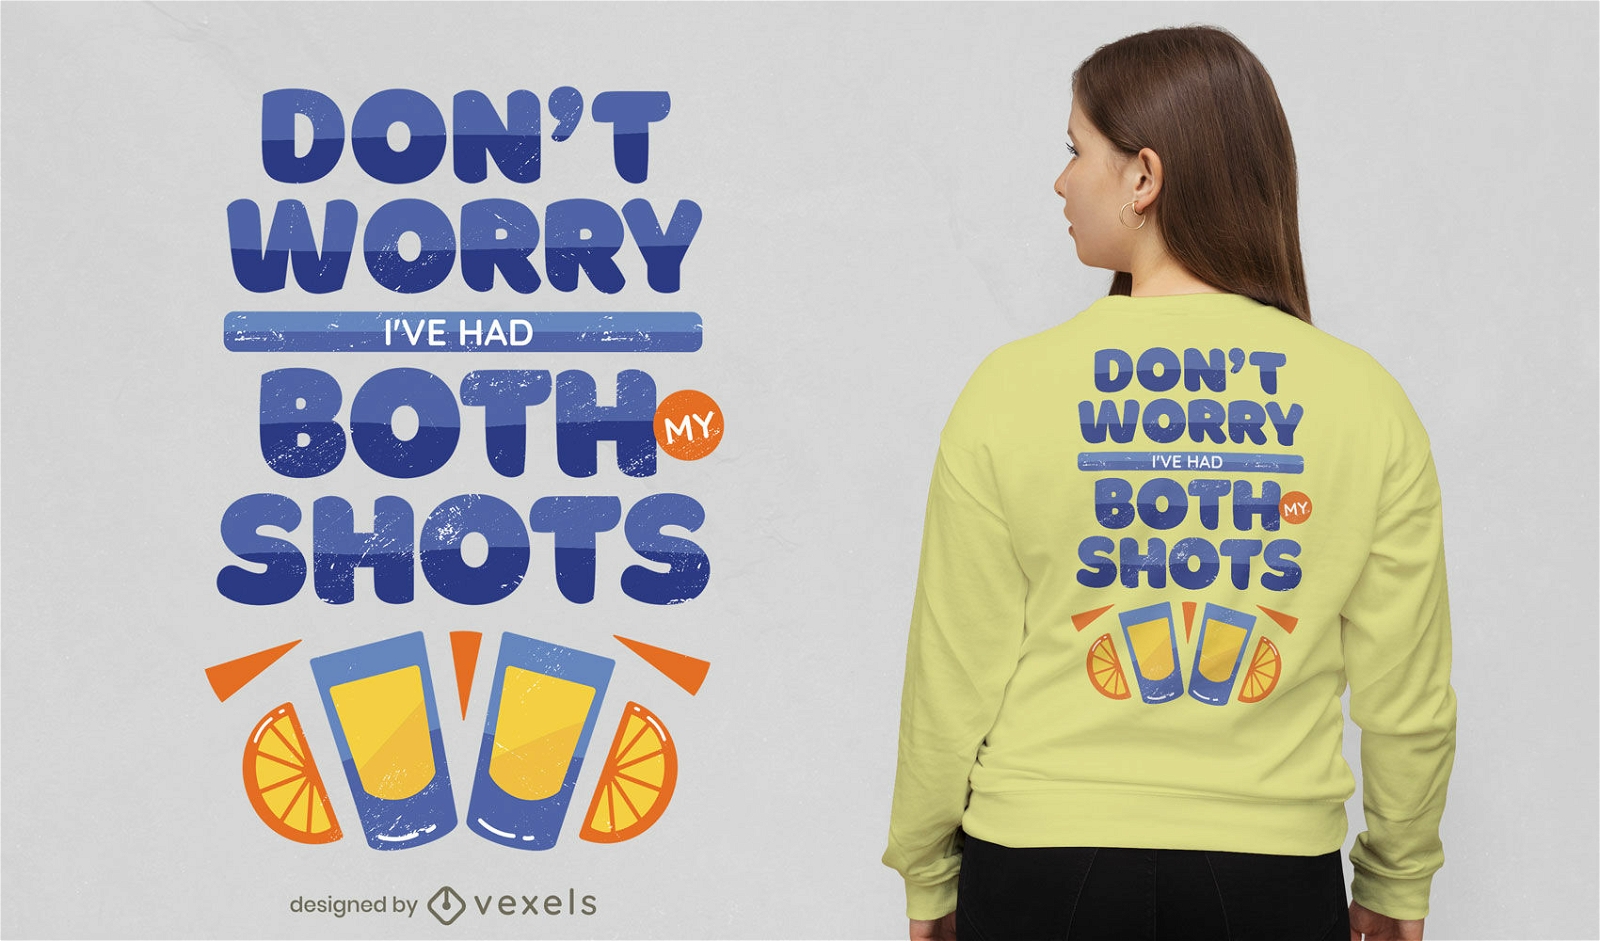 Shots funny quote pun t-shirt design